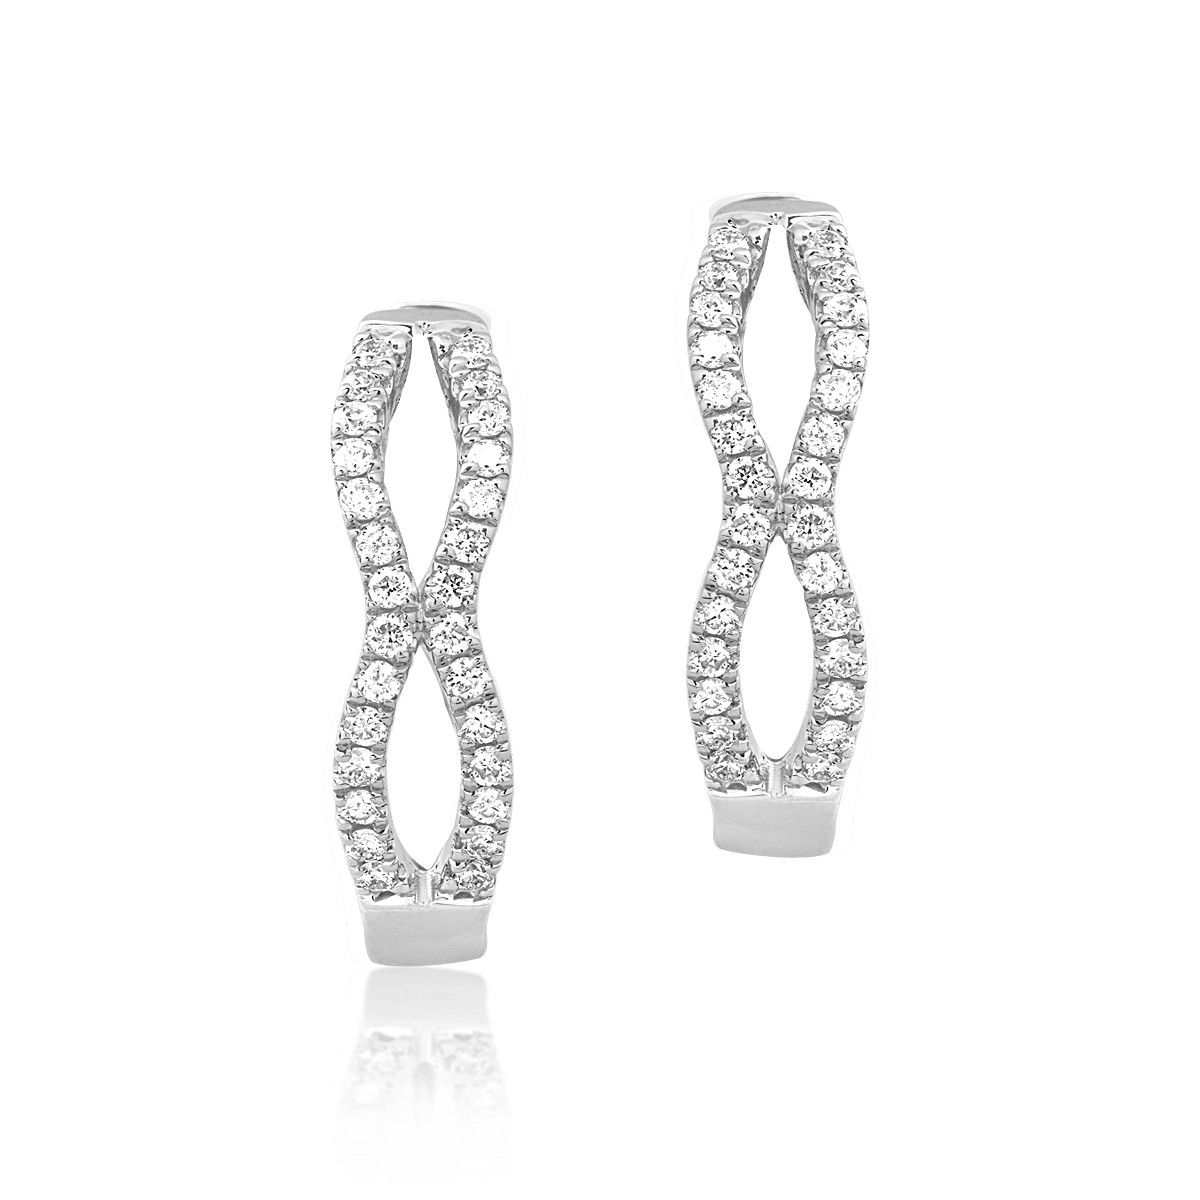 14K white gold infinite earrings with 0.15ct diamonds